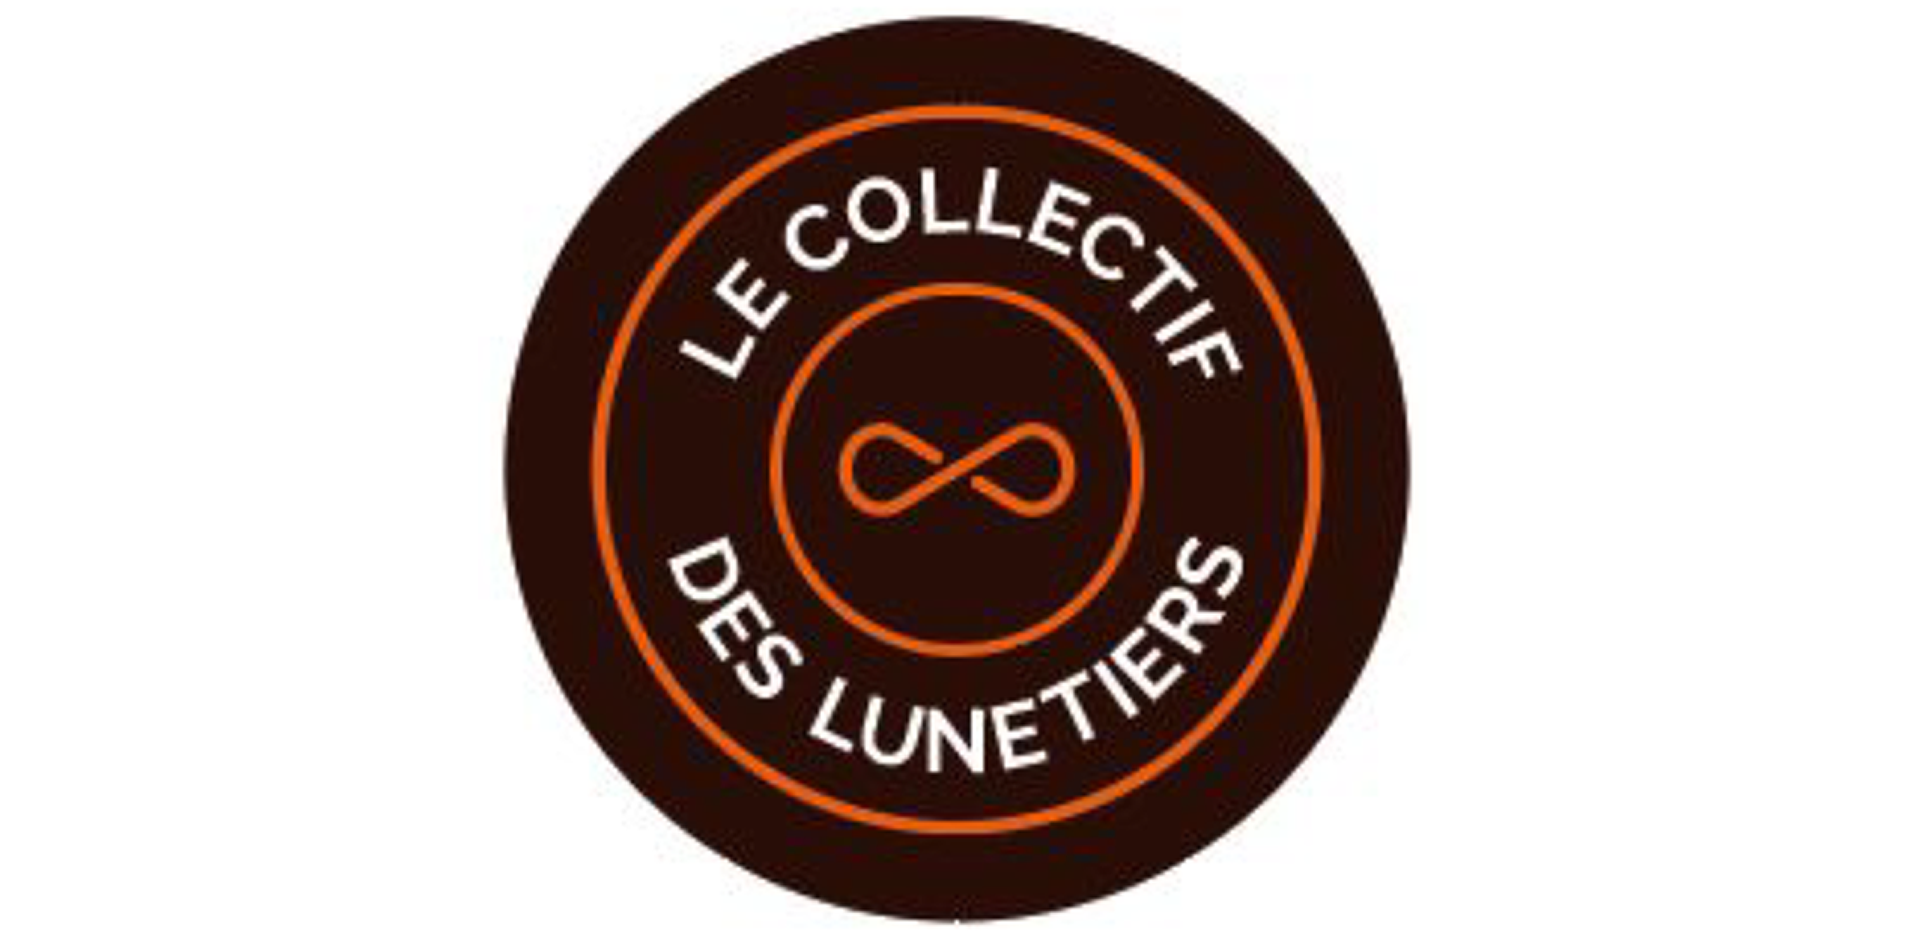 Collectif des Lunetiers